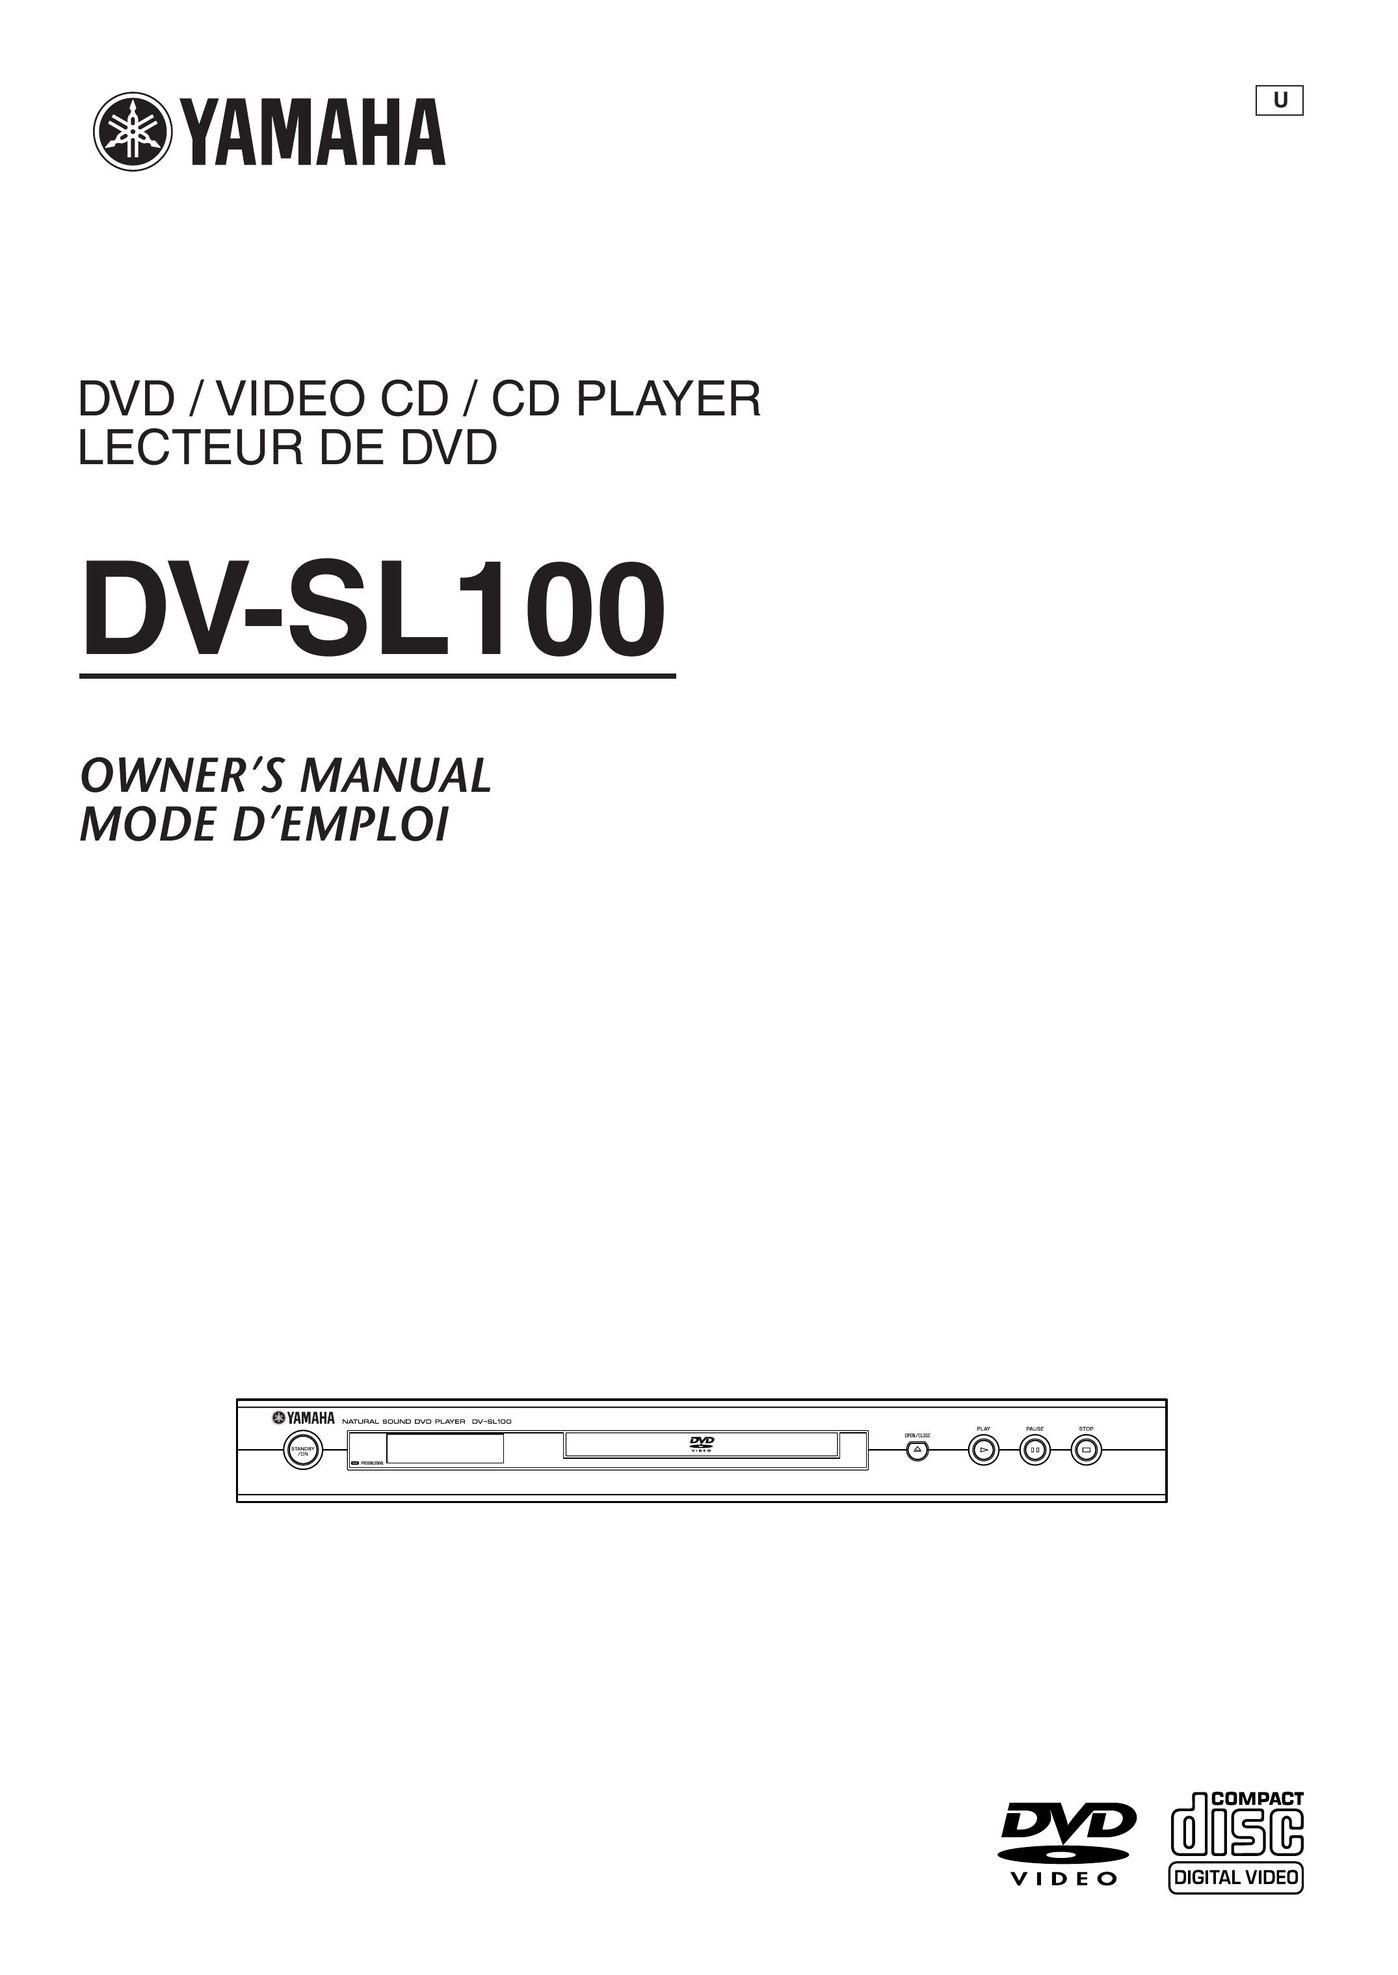 Yamaha DV-SL100 DVD Player User Manual